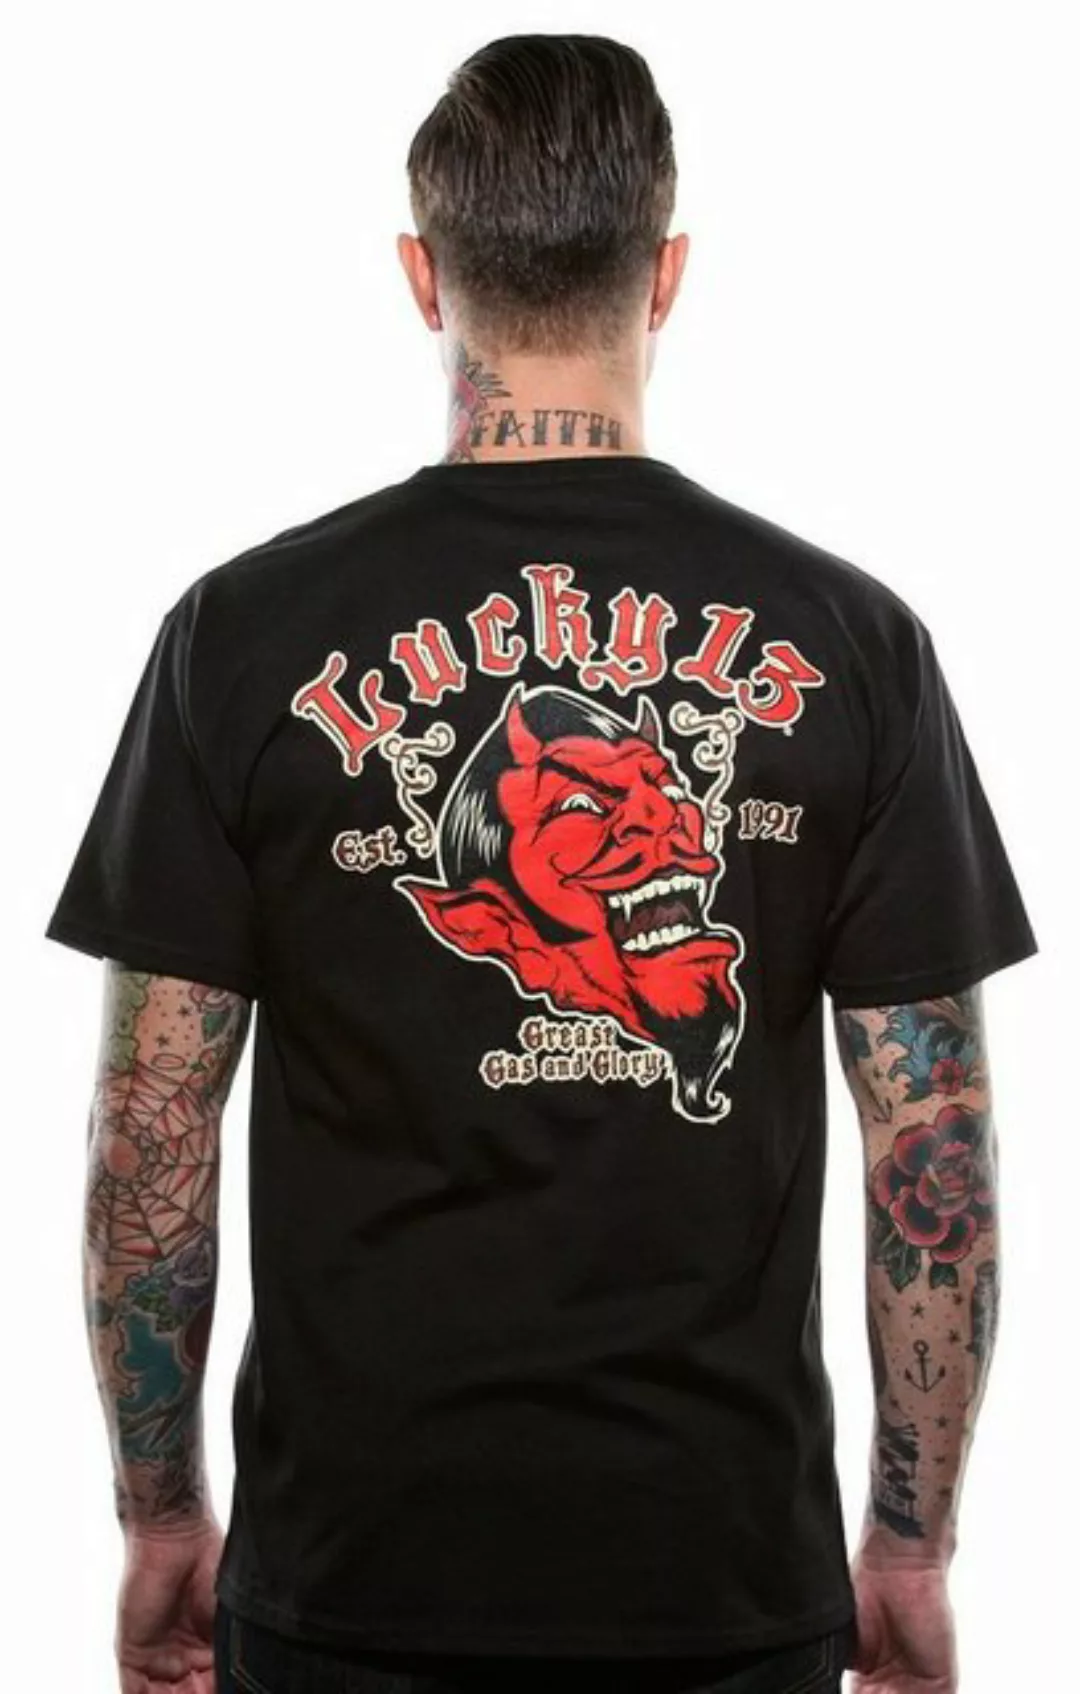 Lucky 13 T-Shirt günstig online kaufen